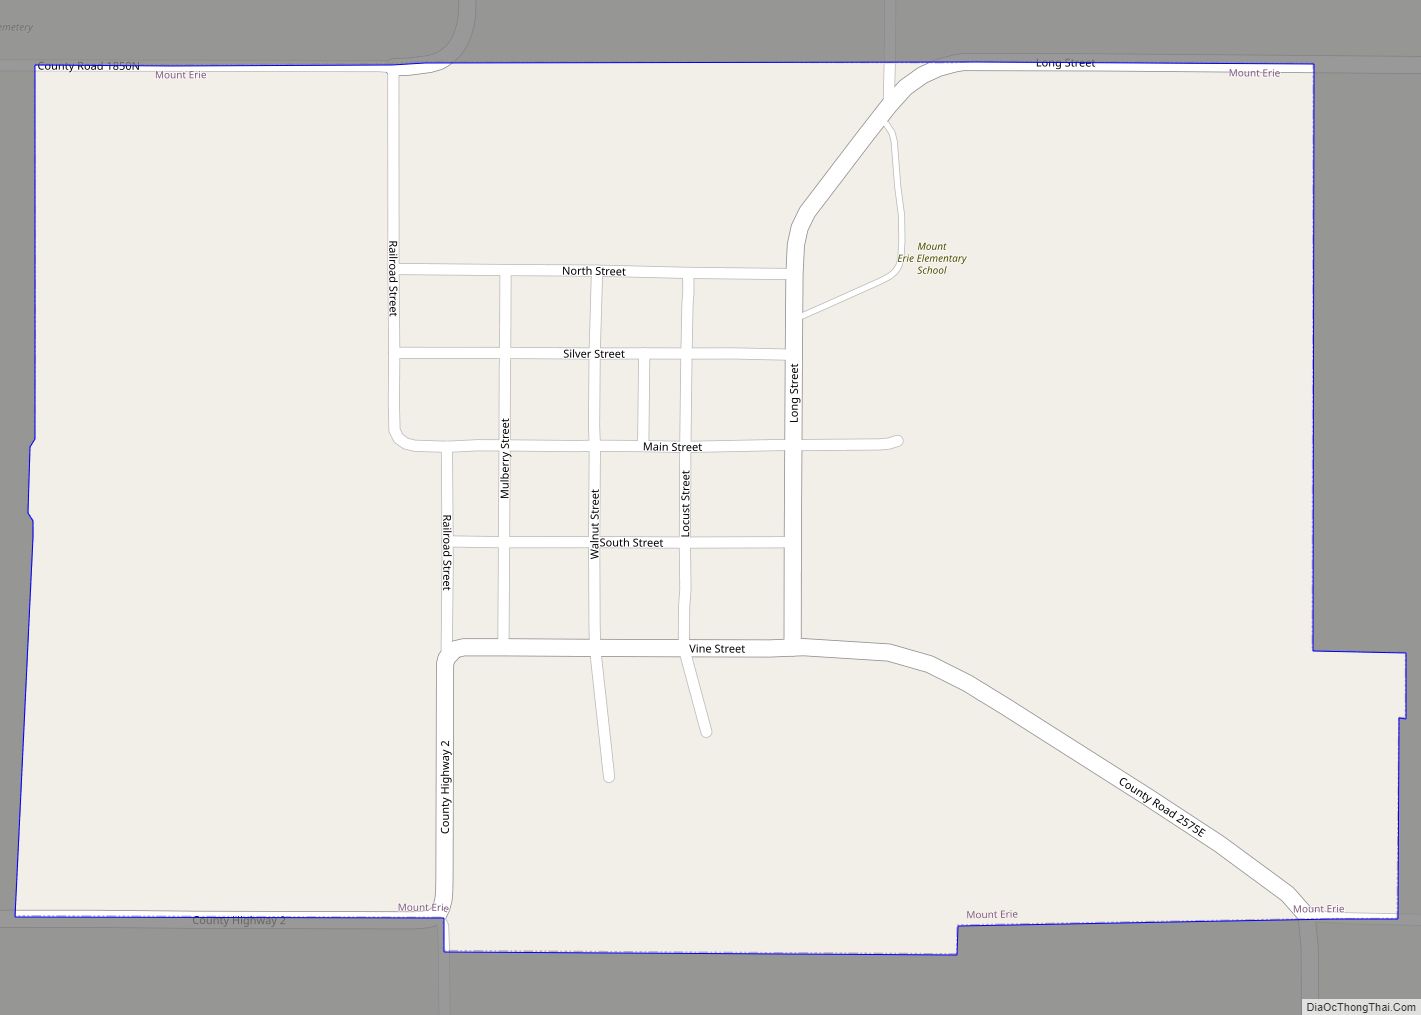 Map of Mount Erie village